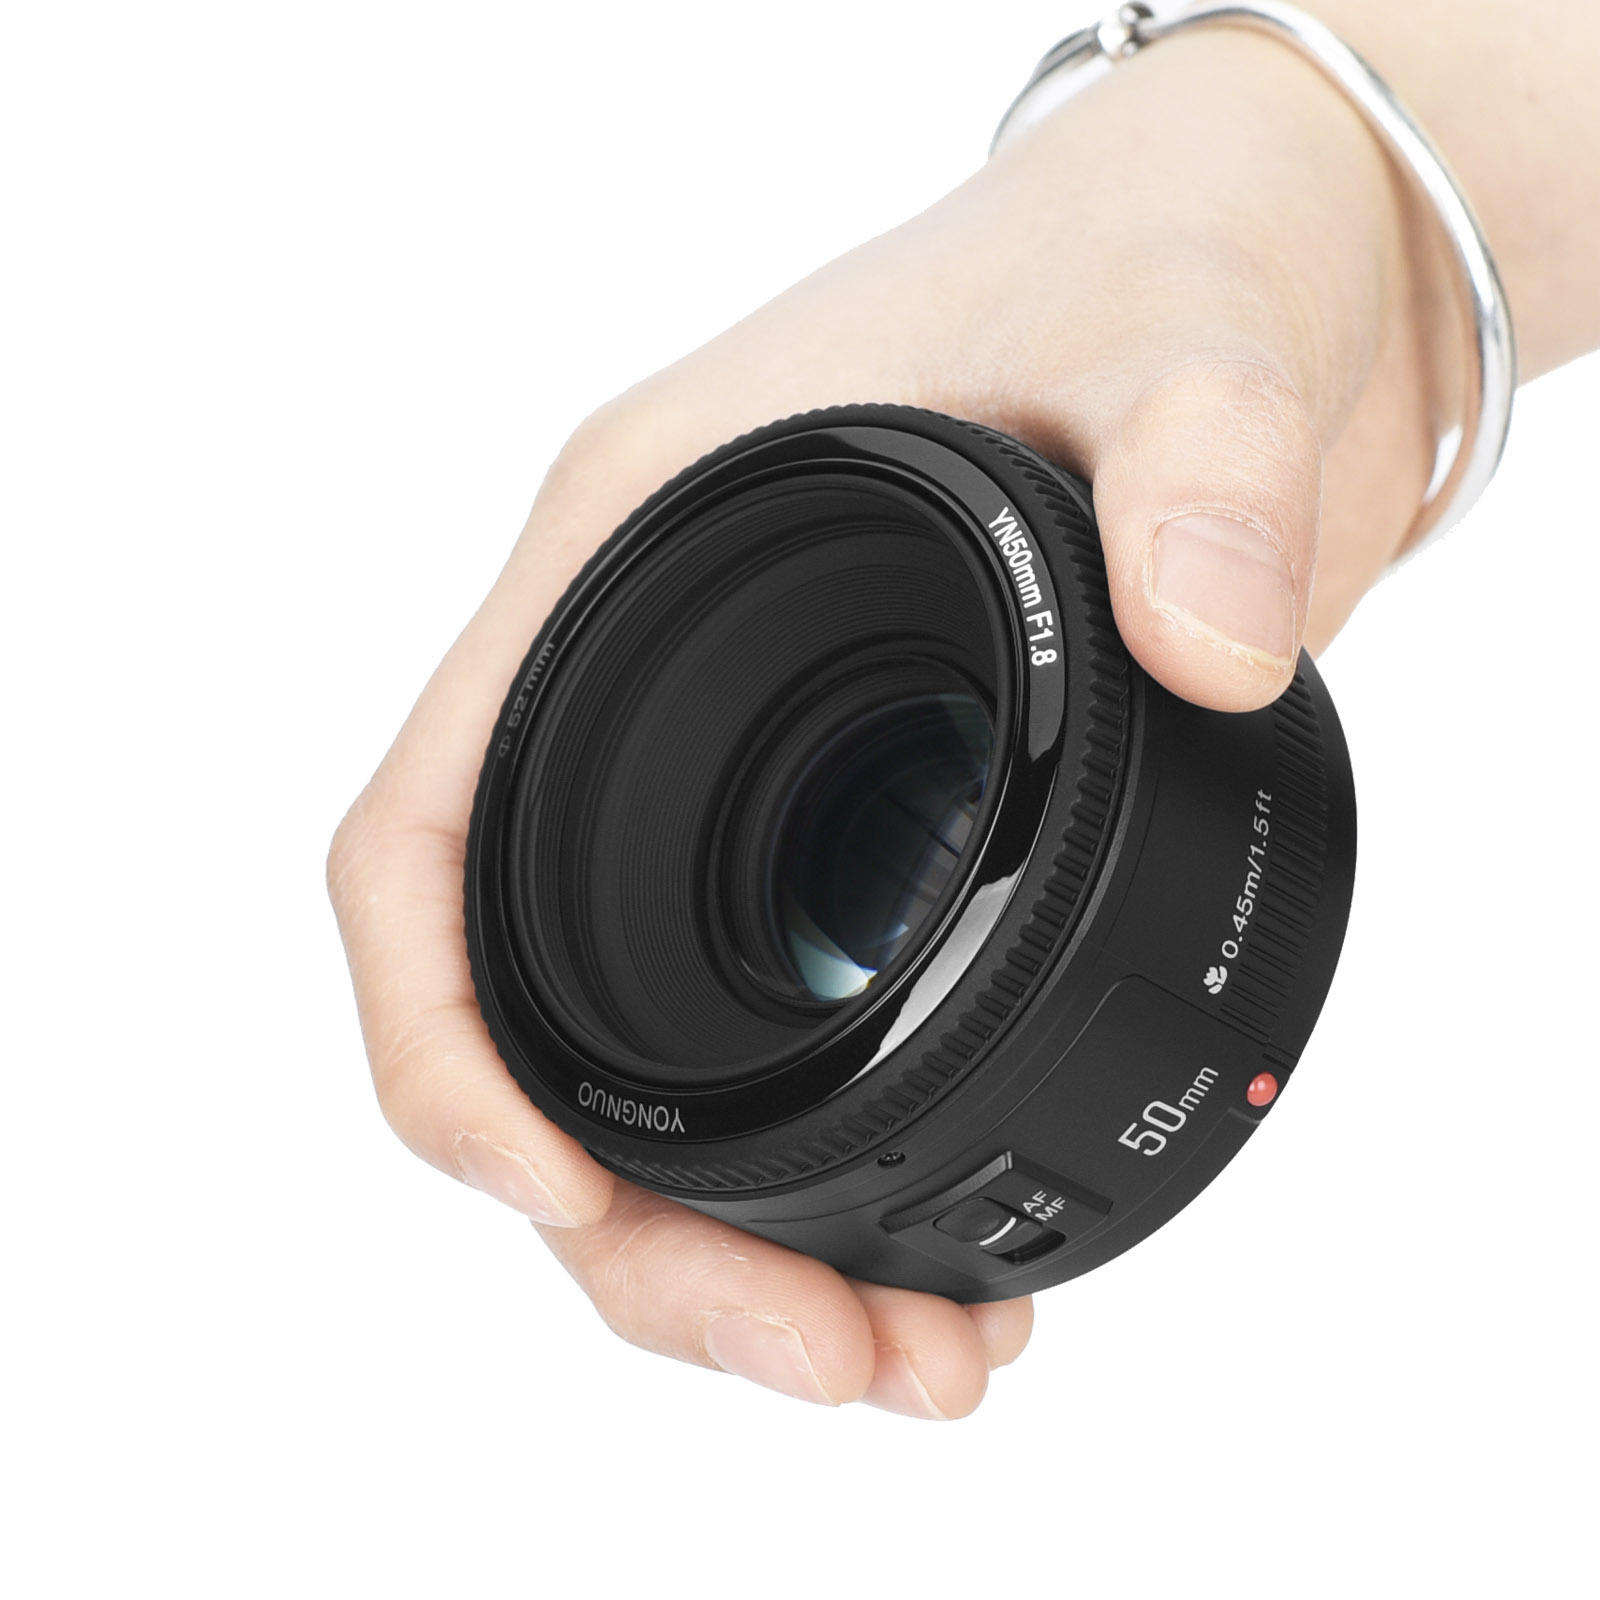 YONGNUO YN50mm F1.8 For Canon EF Mount Camera, Auto Focus, Full 